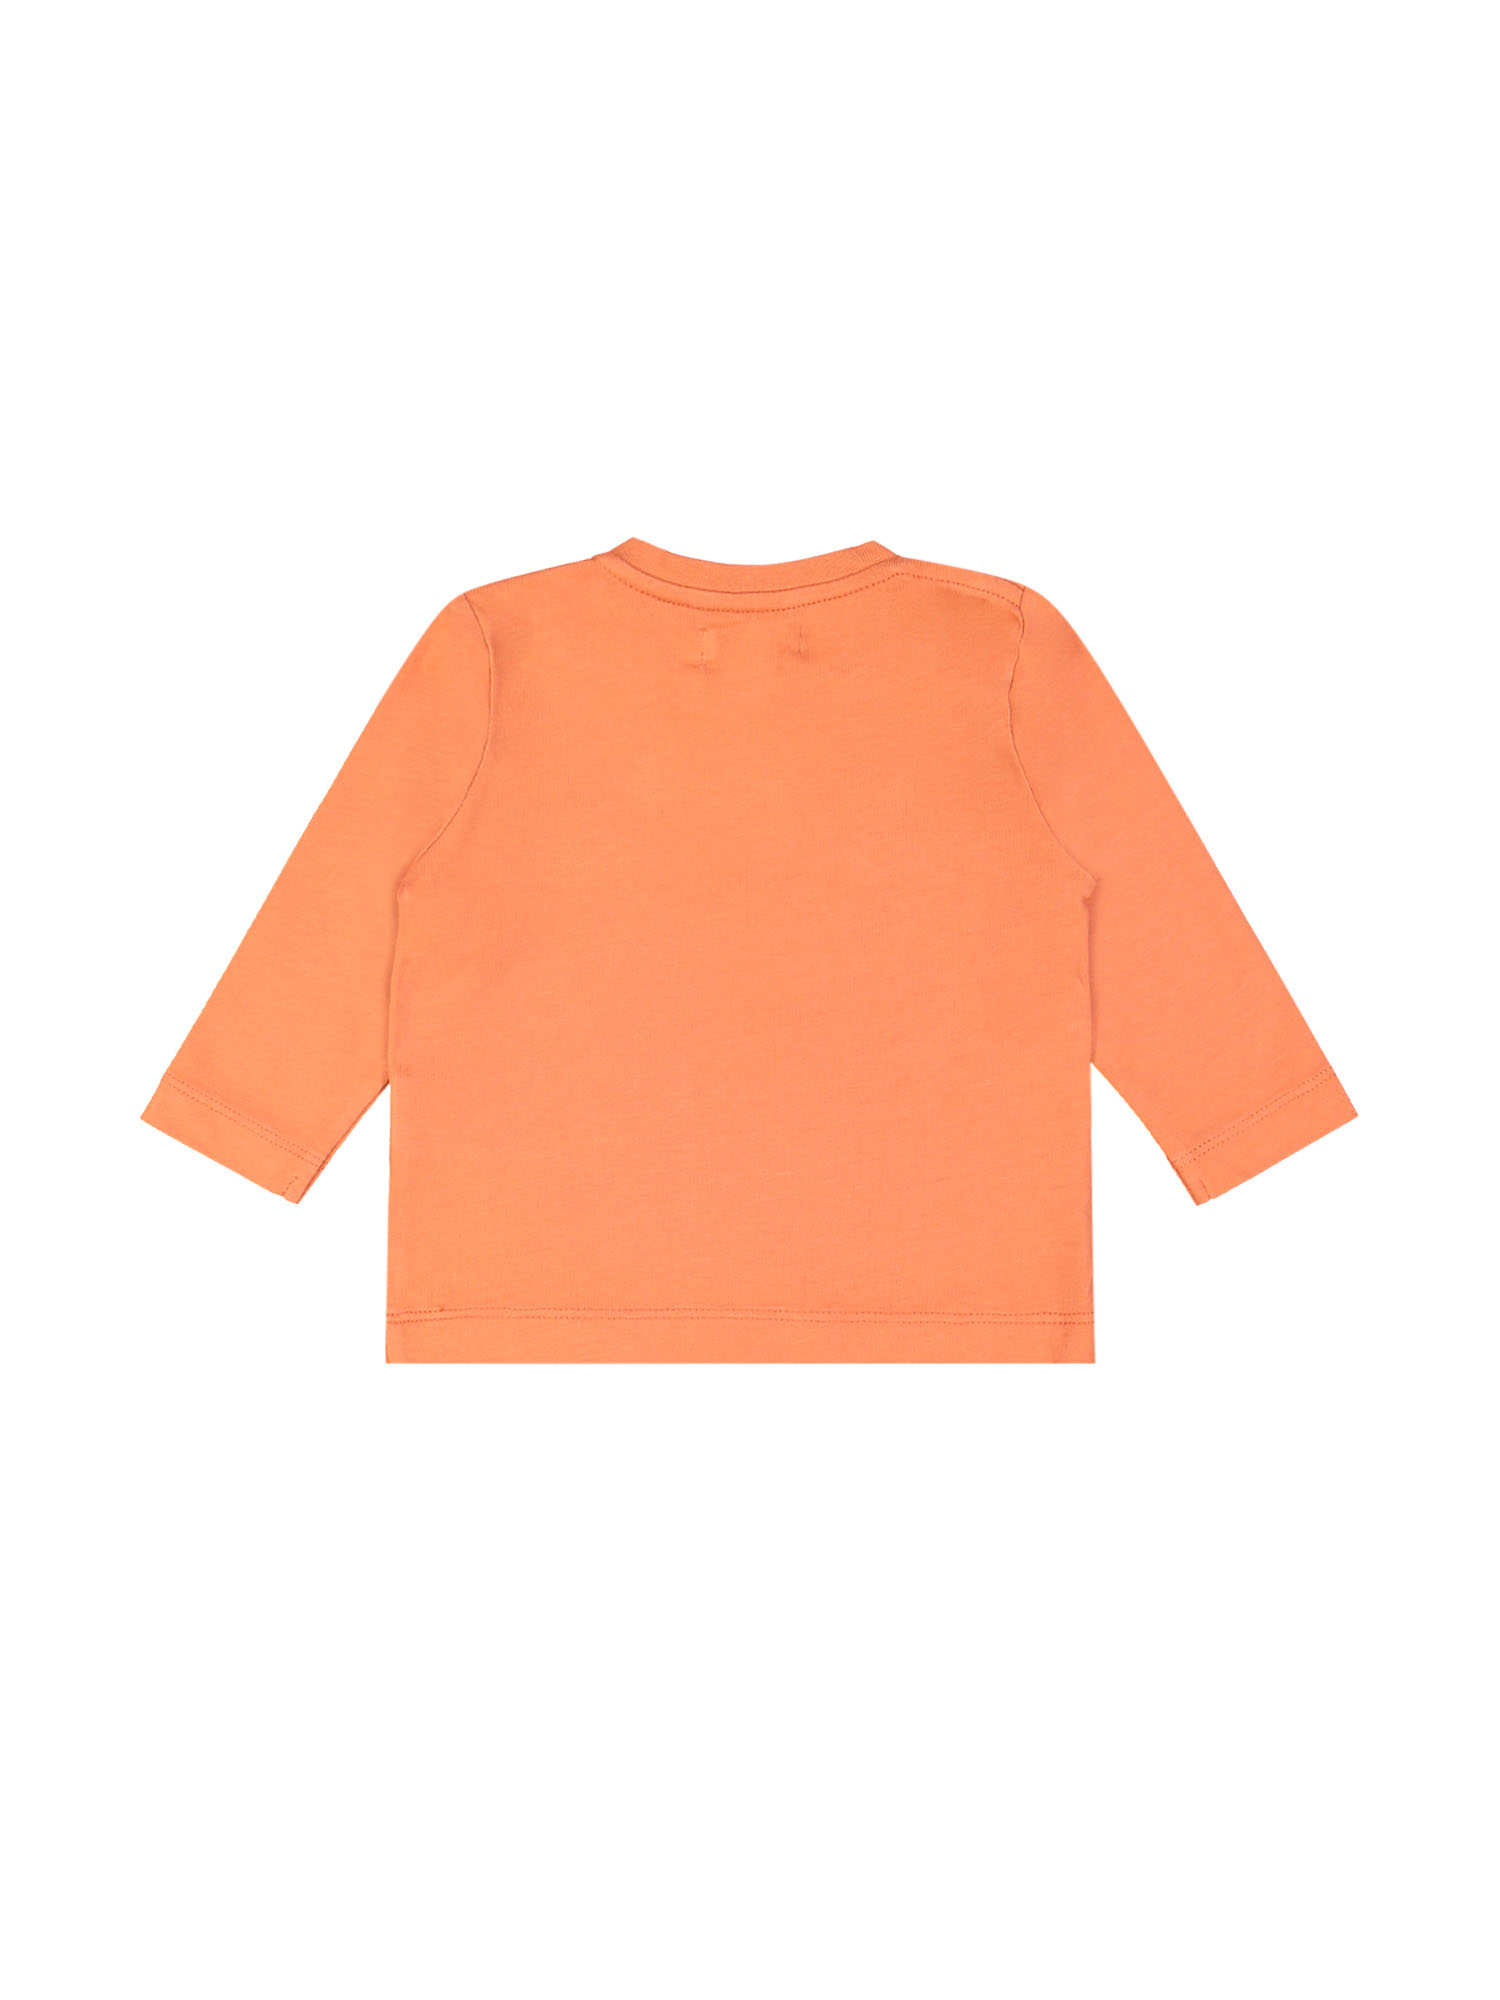 T-shirt mini home alone oranje 03m